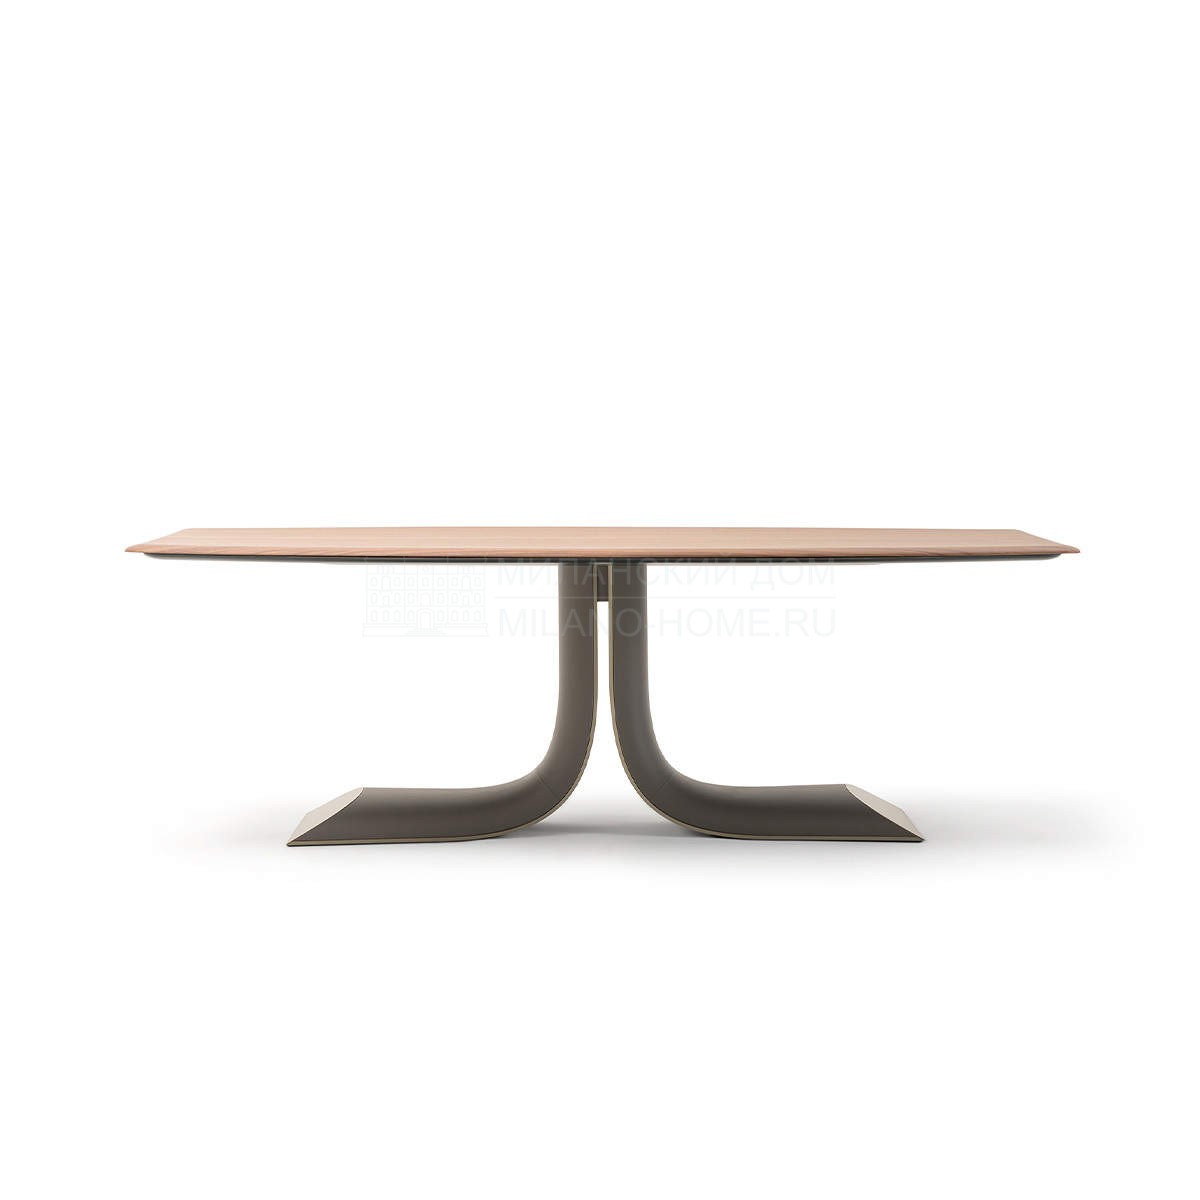 Обеденный стол Soul table из Италии фабрики TURRI